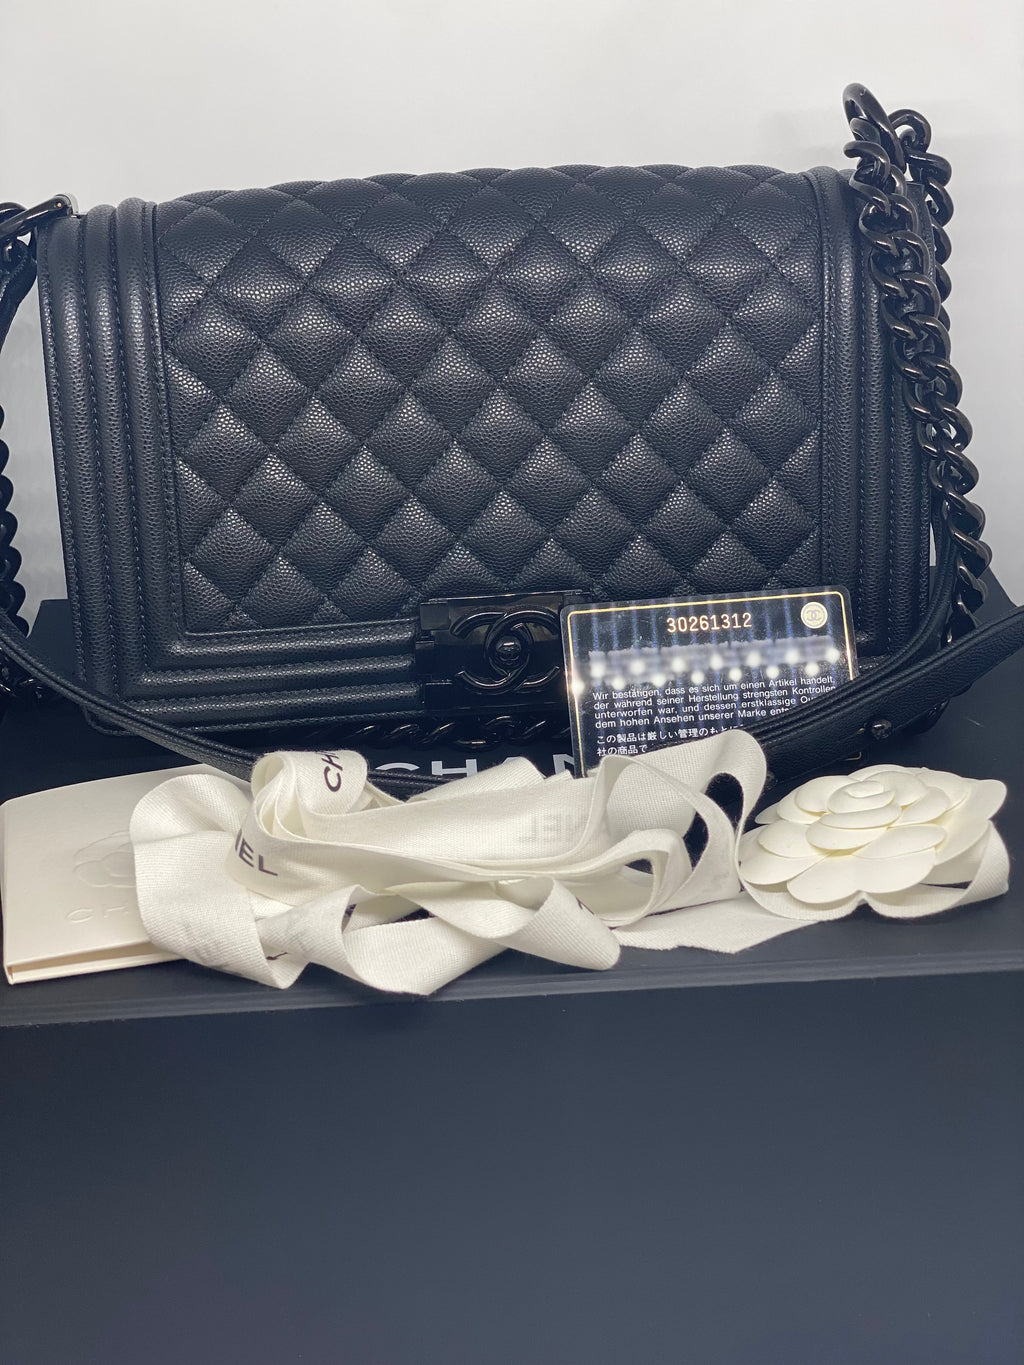 authentic black chanel handbag